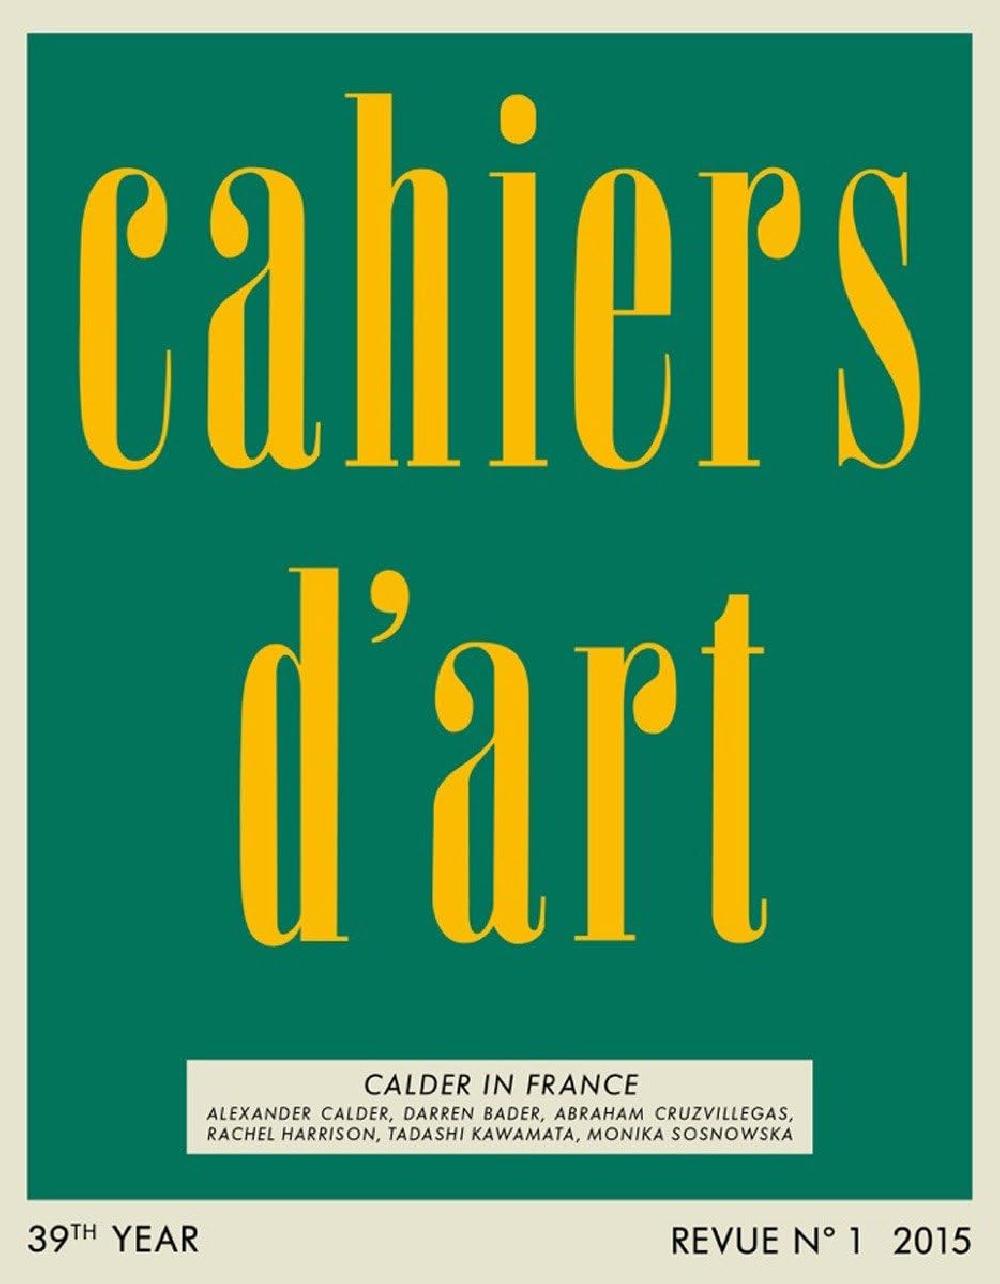 REVUE CAHIERS D ART NUMRO 1 - CALDER IN FRANCE 